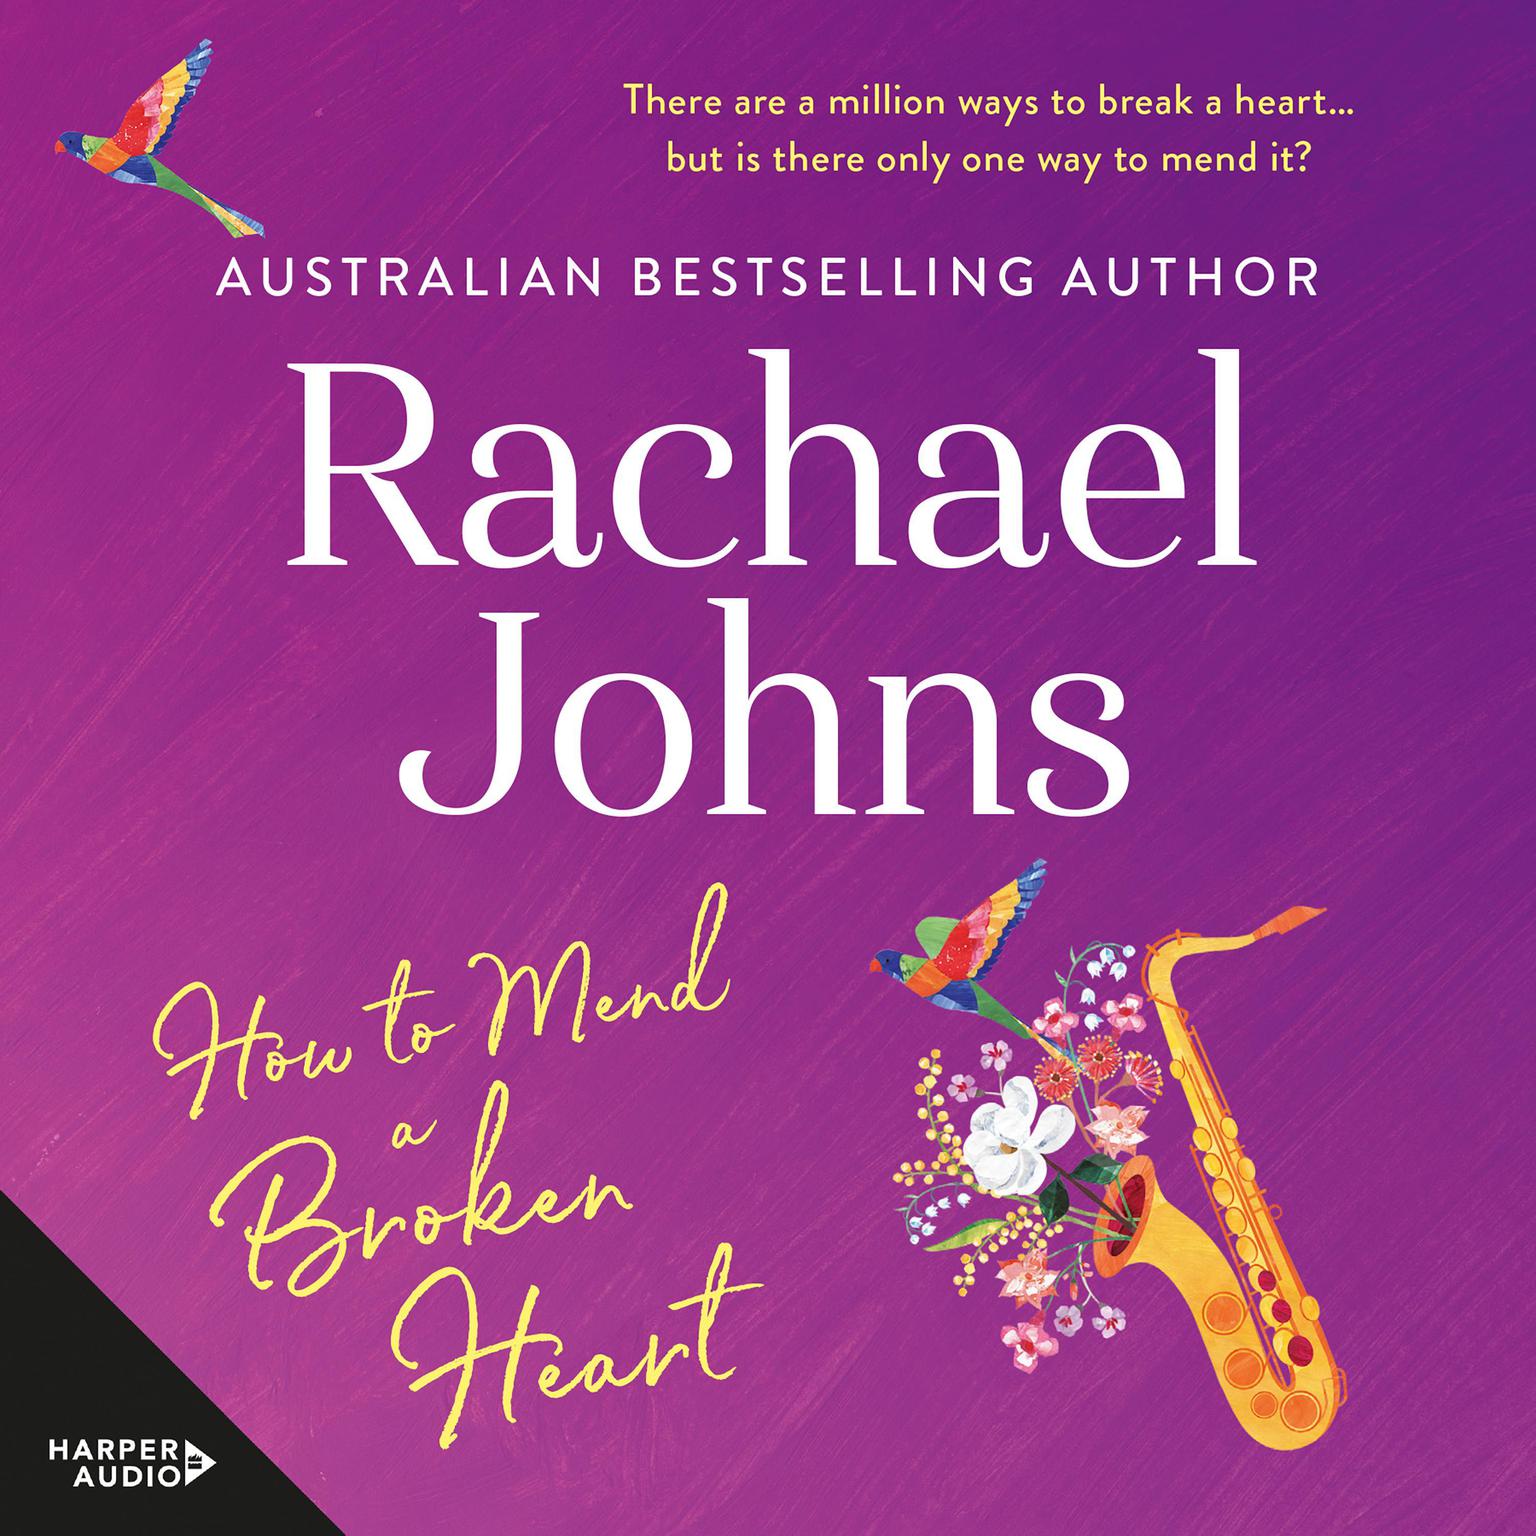 How to Mend a Broken Heart Audiobook, by Rachael Johns